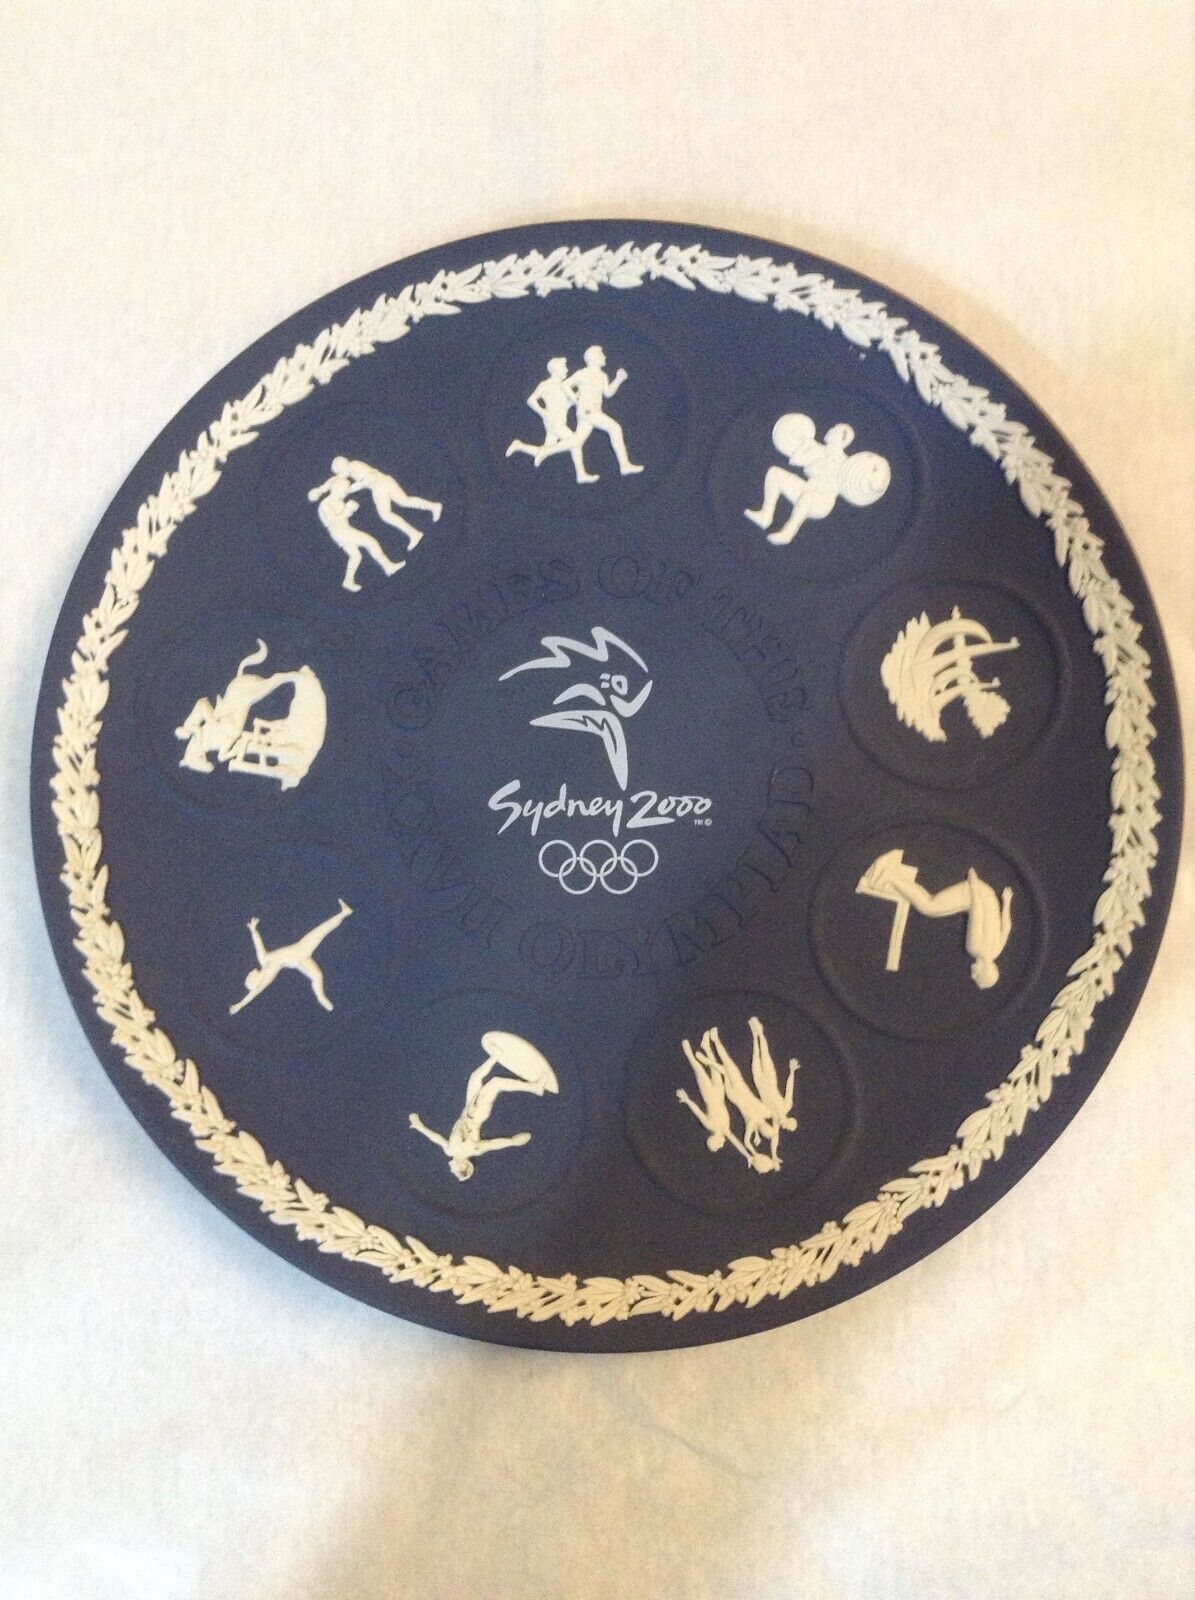 Wedgwood Sydney 2000 LE of 2000 Summer Olympics plate dish dark blue Jasperware